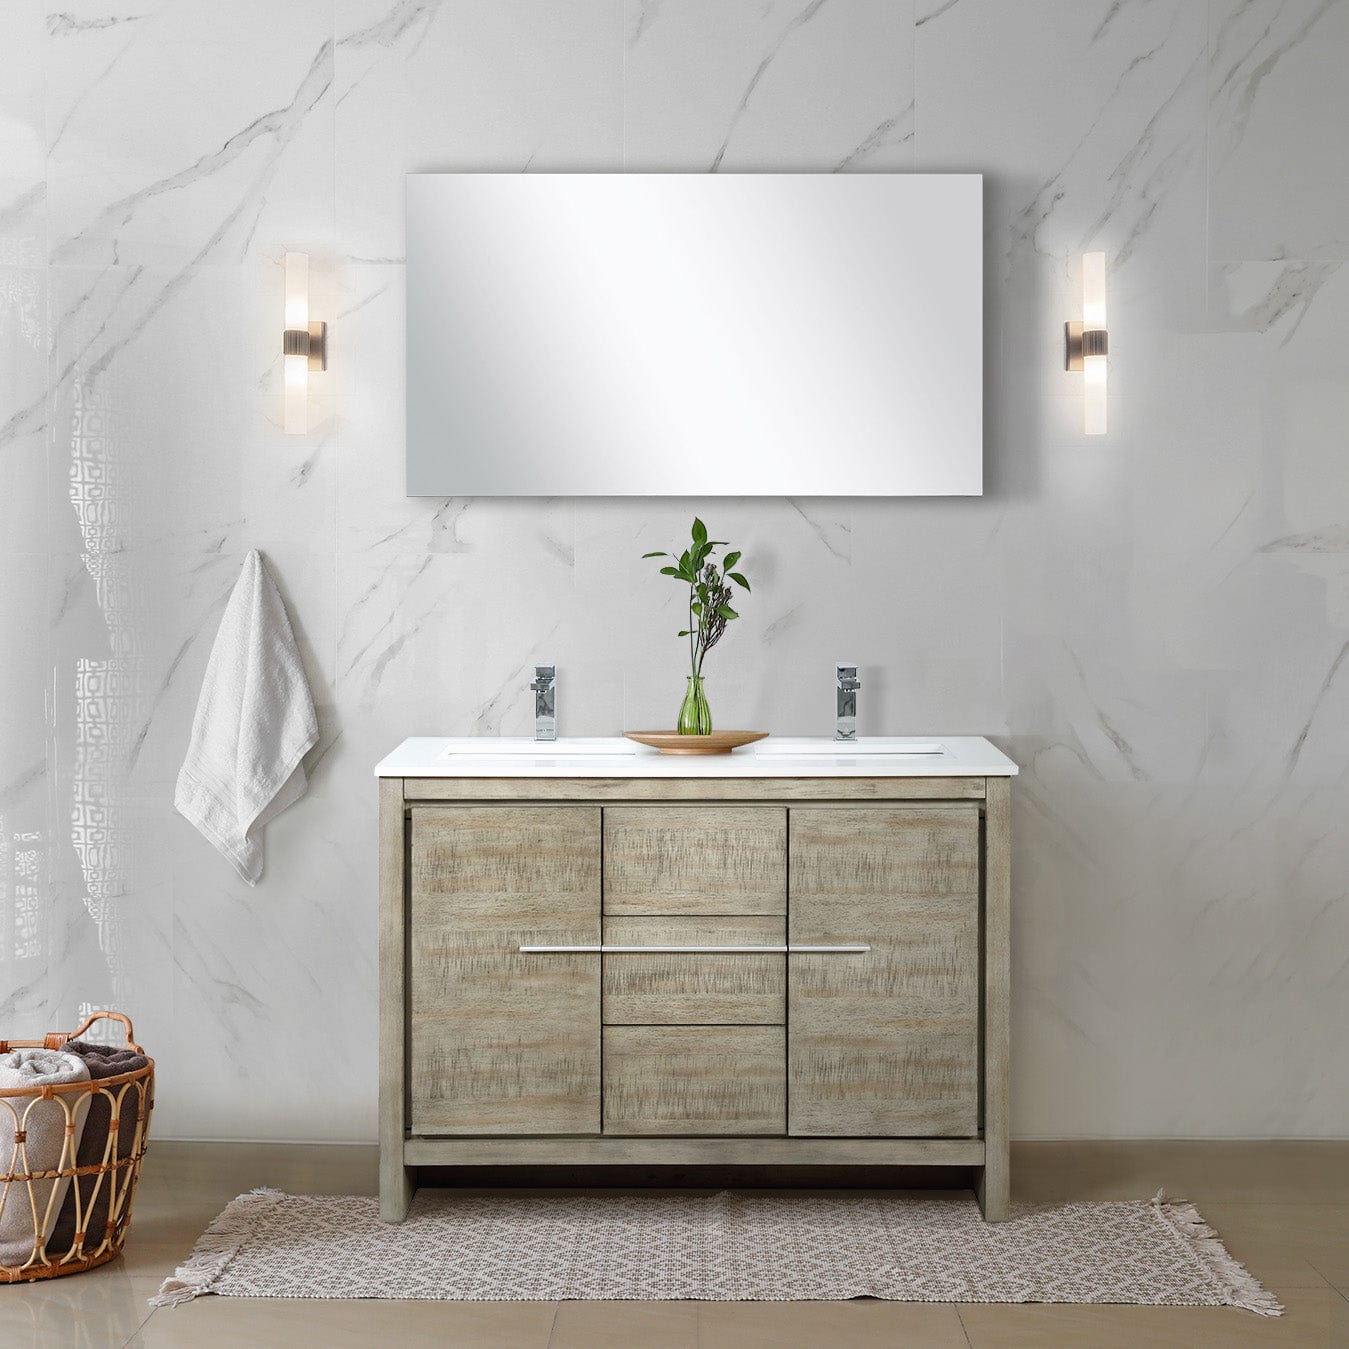 Lexora Bathroom Vanity Cultured Marble / Chrome Faucet / No Mirror Lafarre 48" Rustic Acacia Double Bathroom Vanity